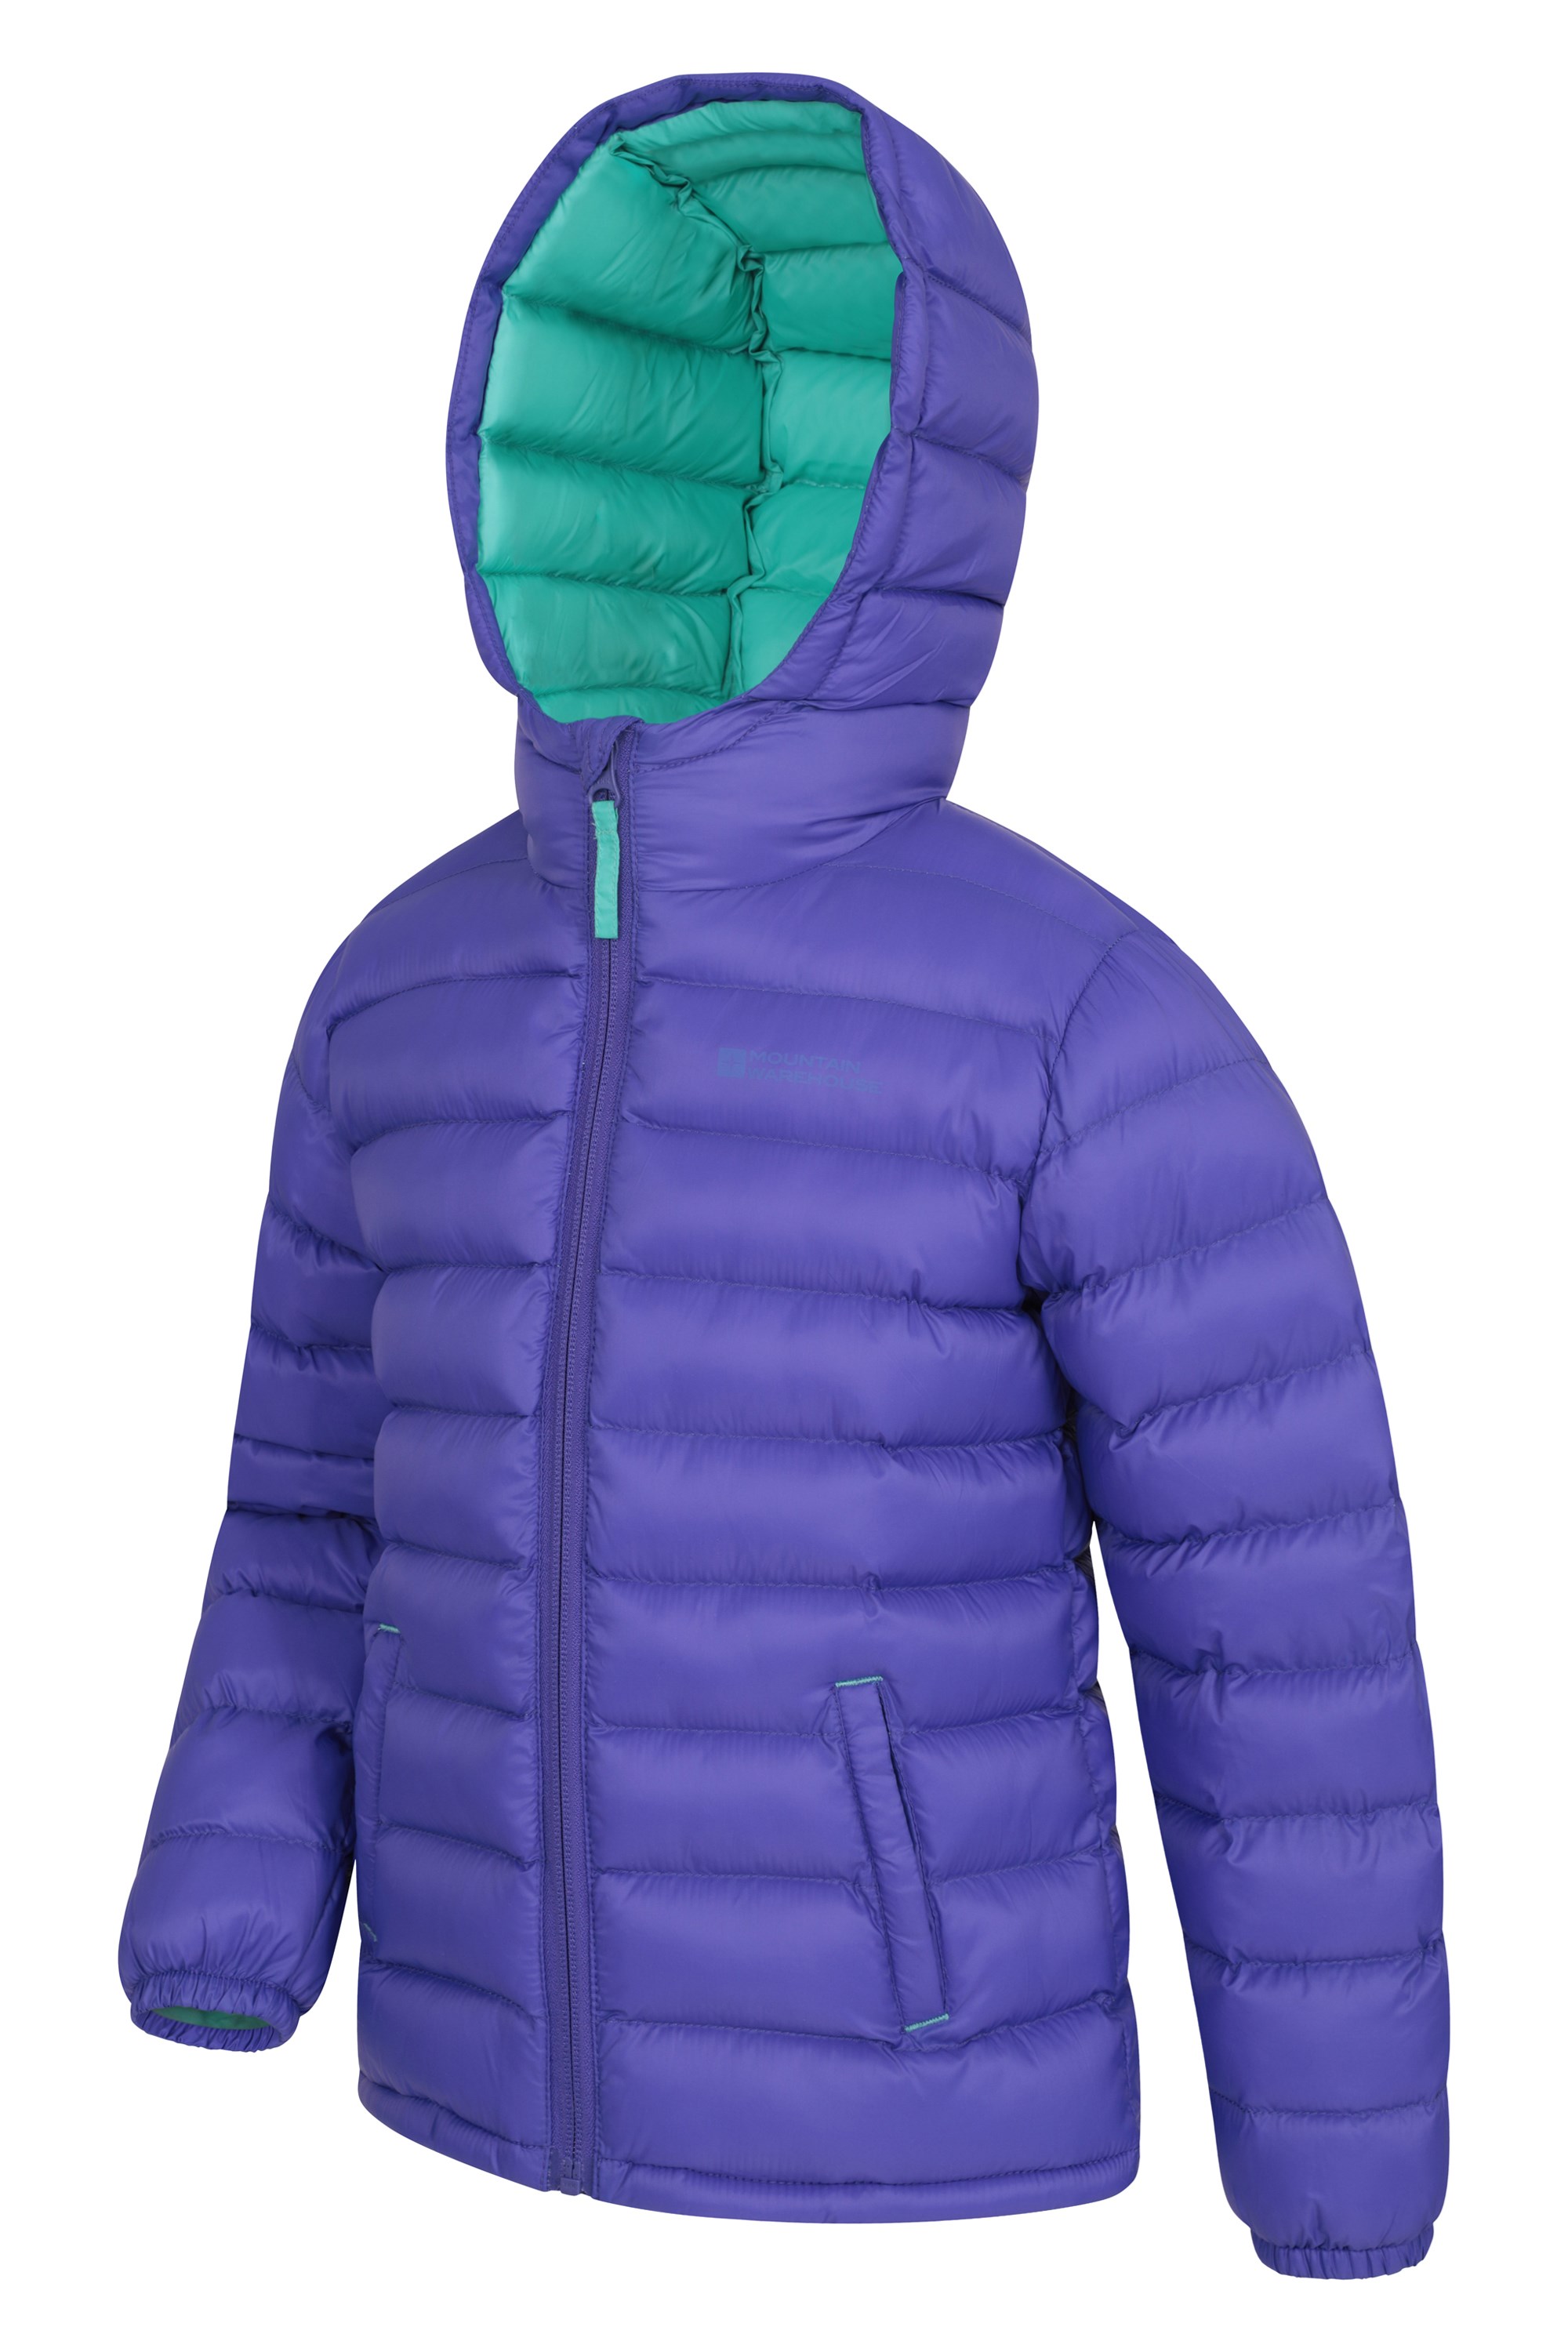 Mountain Warehouse Snow Padded Kids Jacket Adjustable Cuffs & Hood Pockets Hood Fleece Lined Collar Water Resistant Ripstop Ideal Childrens Winter Coat 